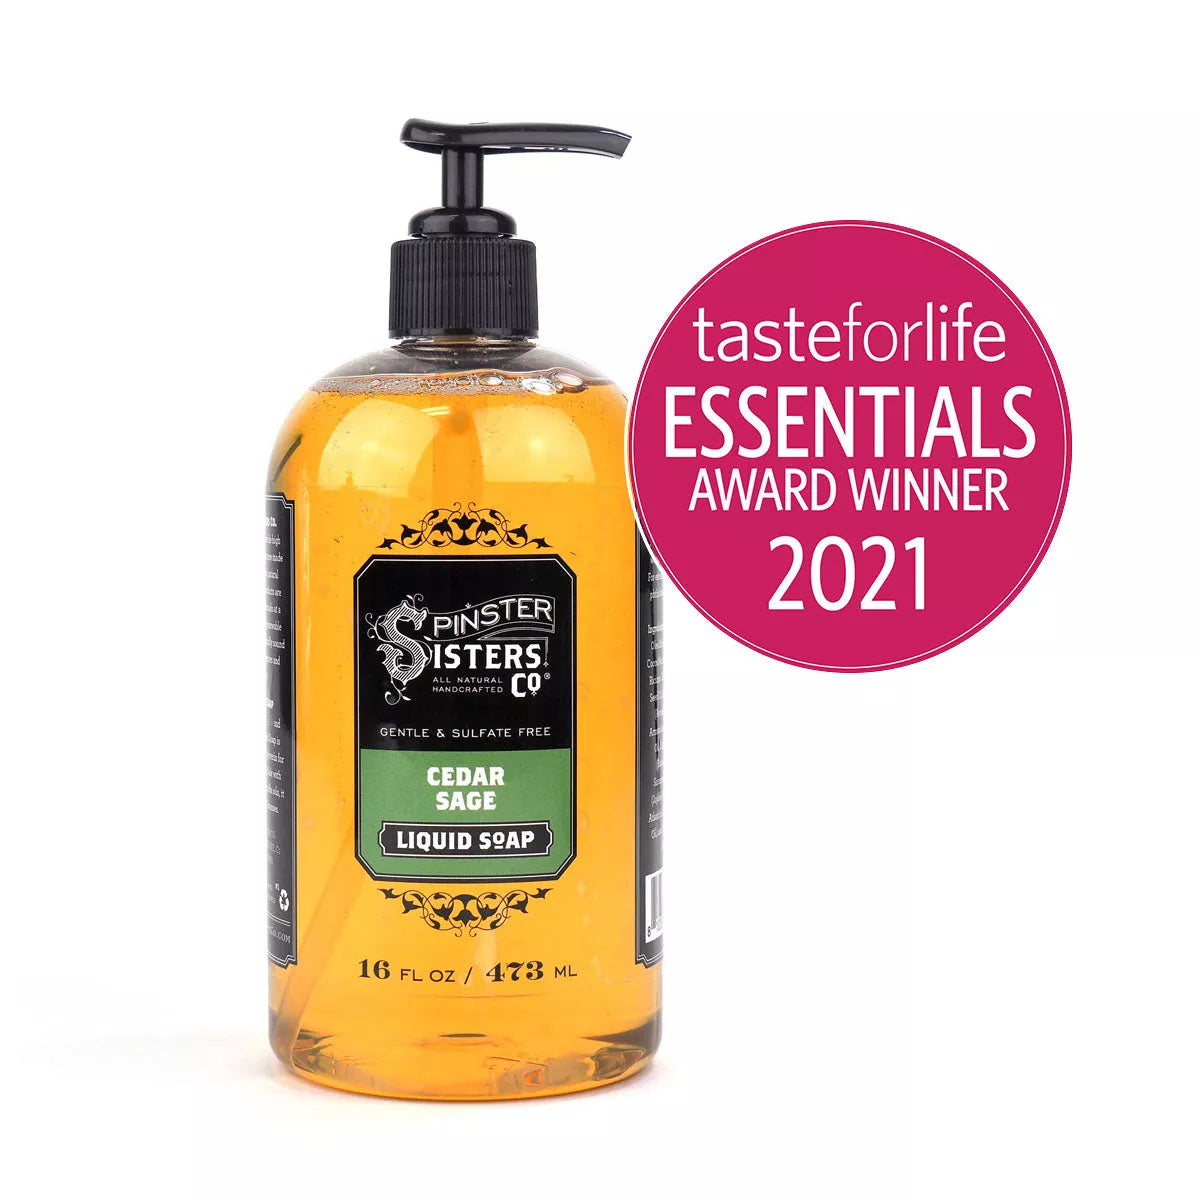 Bright yellow liquid hand and body soap in Cedar Sage Tasteforlife Essentials Award Winner 2021